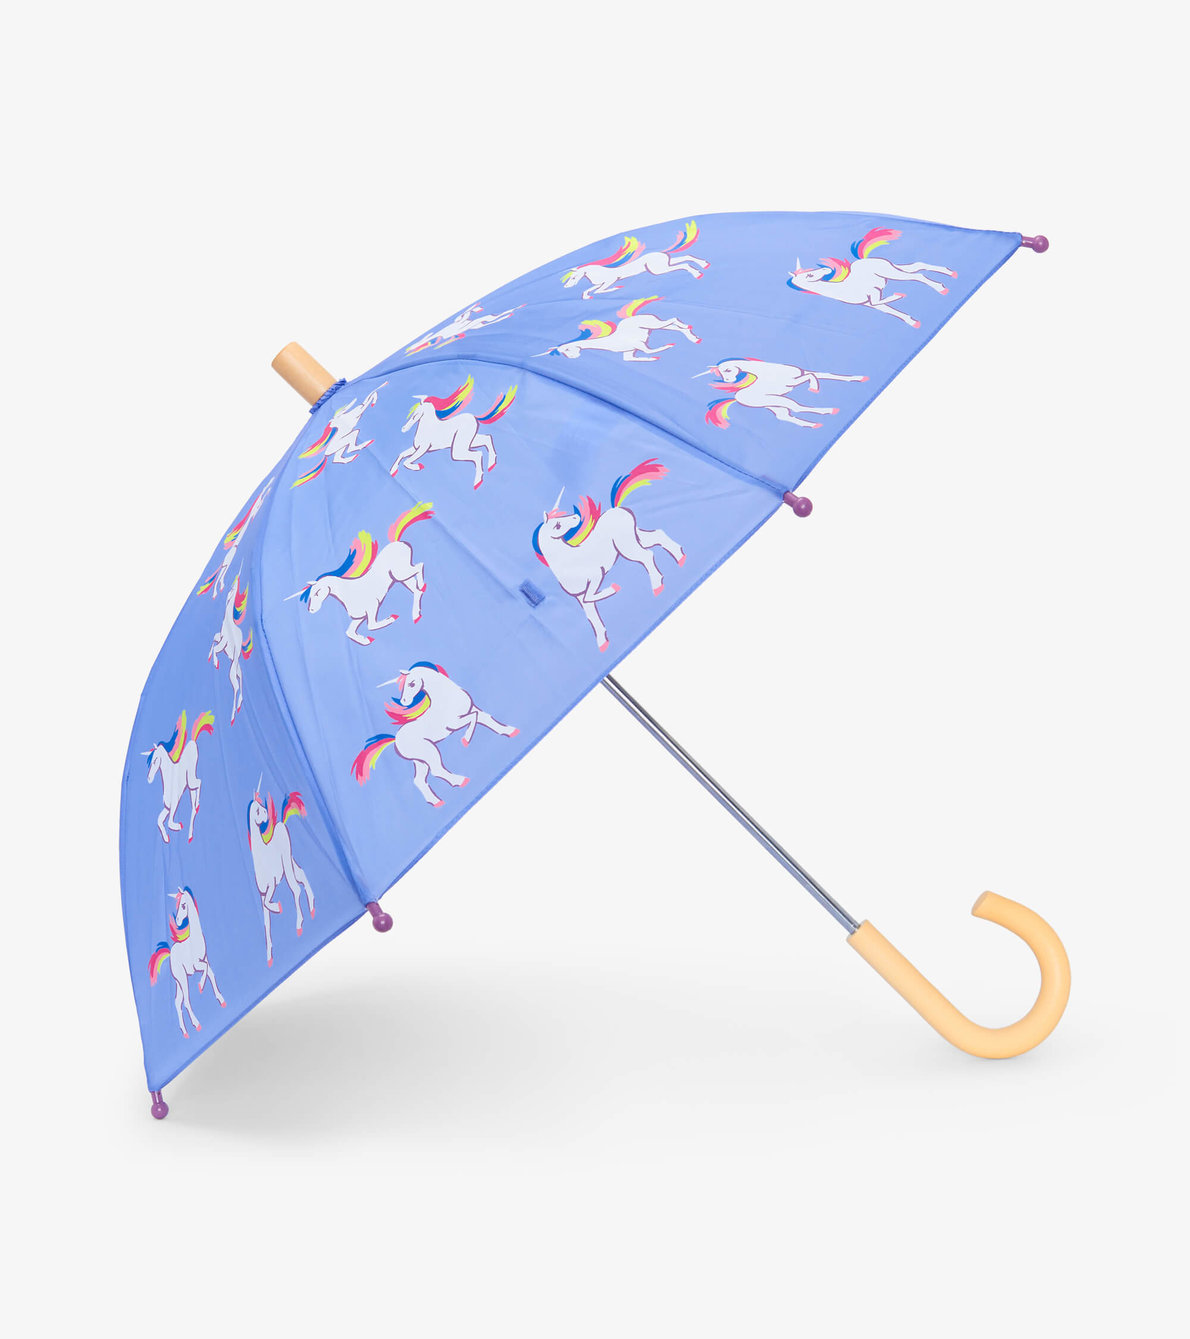 View larger image of Unicorn Sky Dance Umbrella